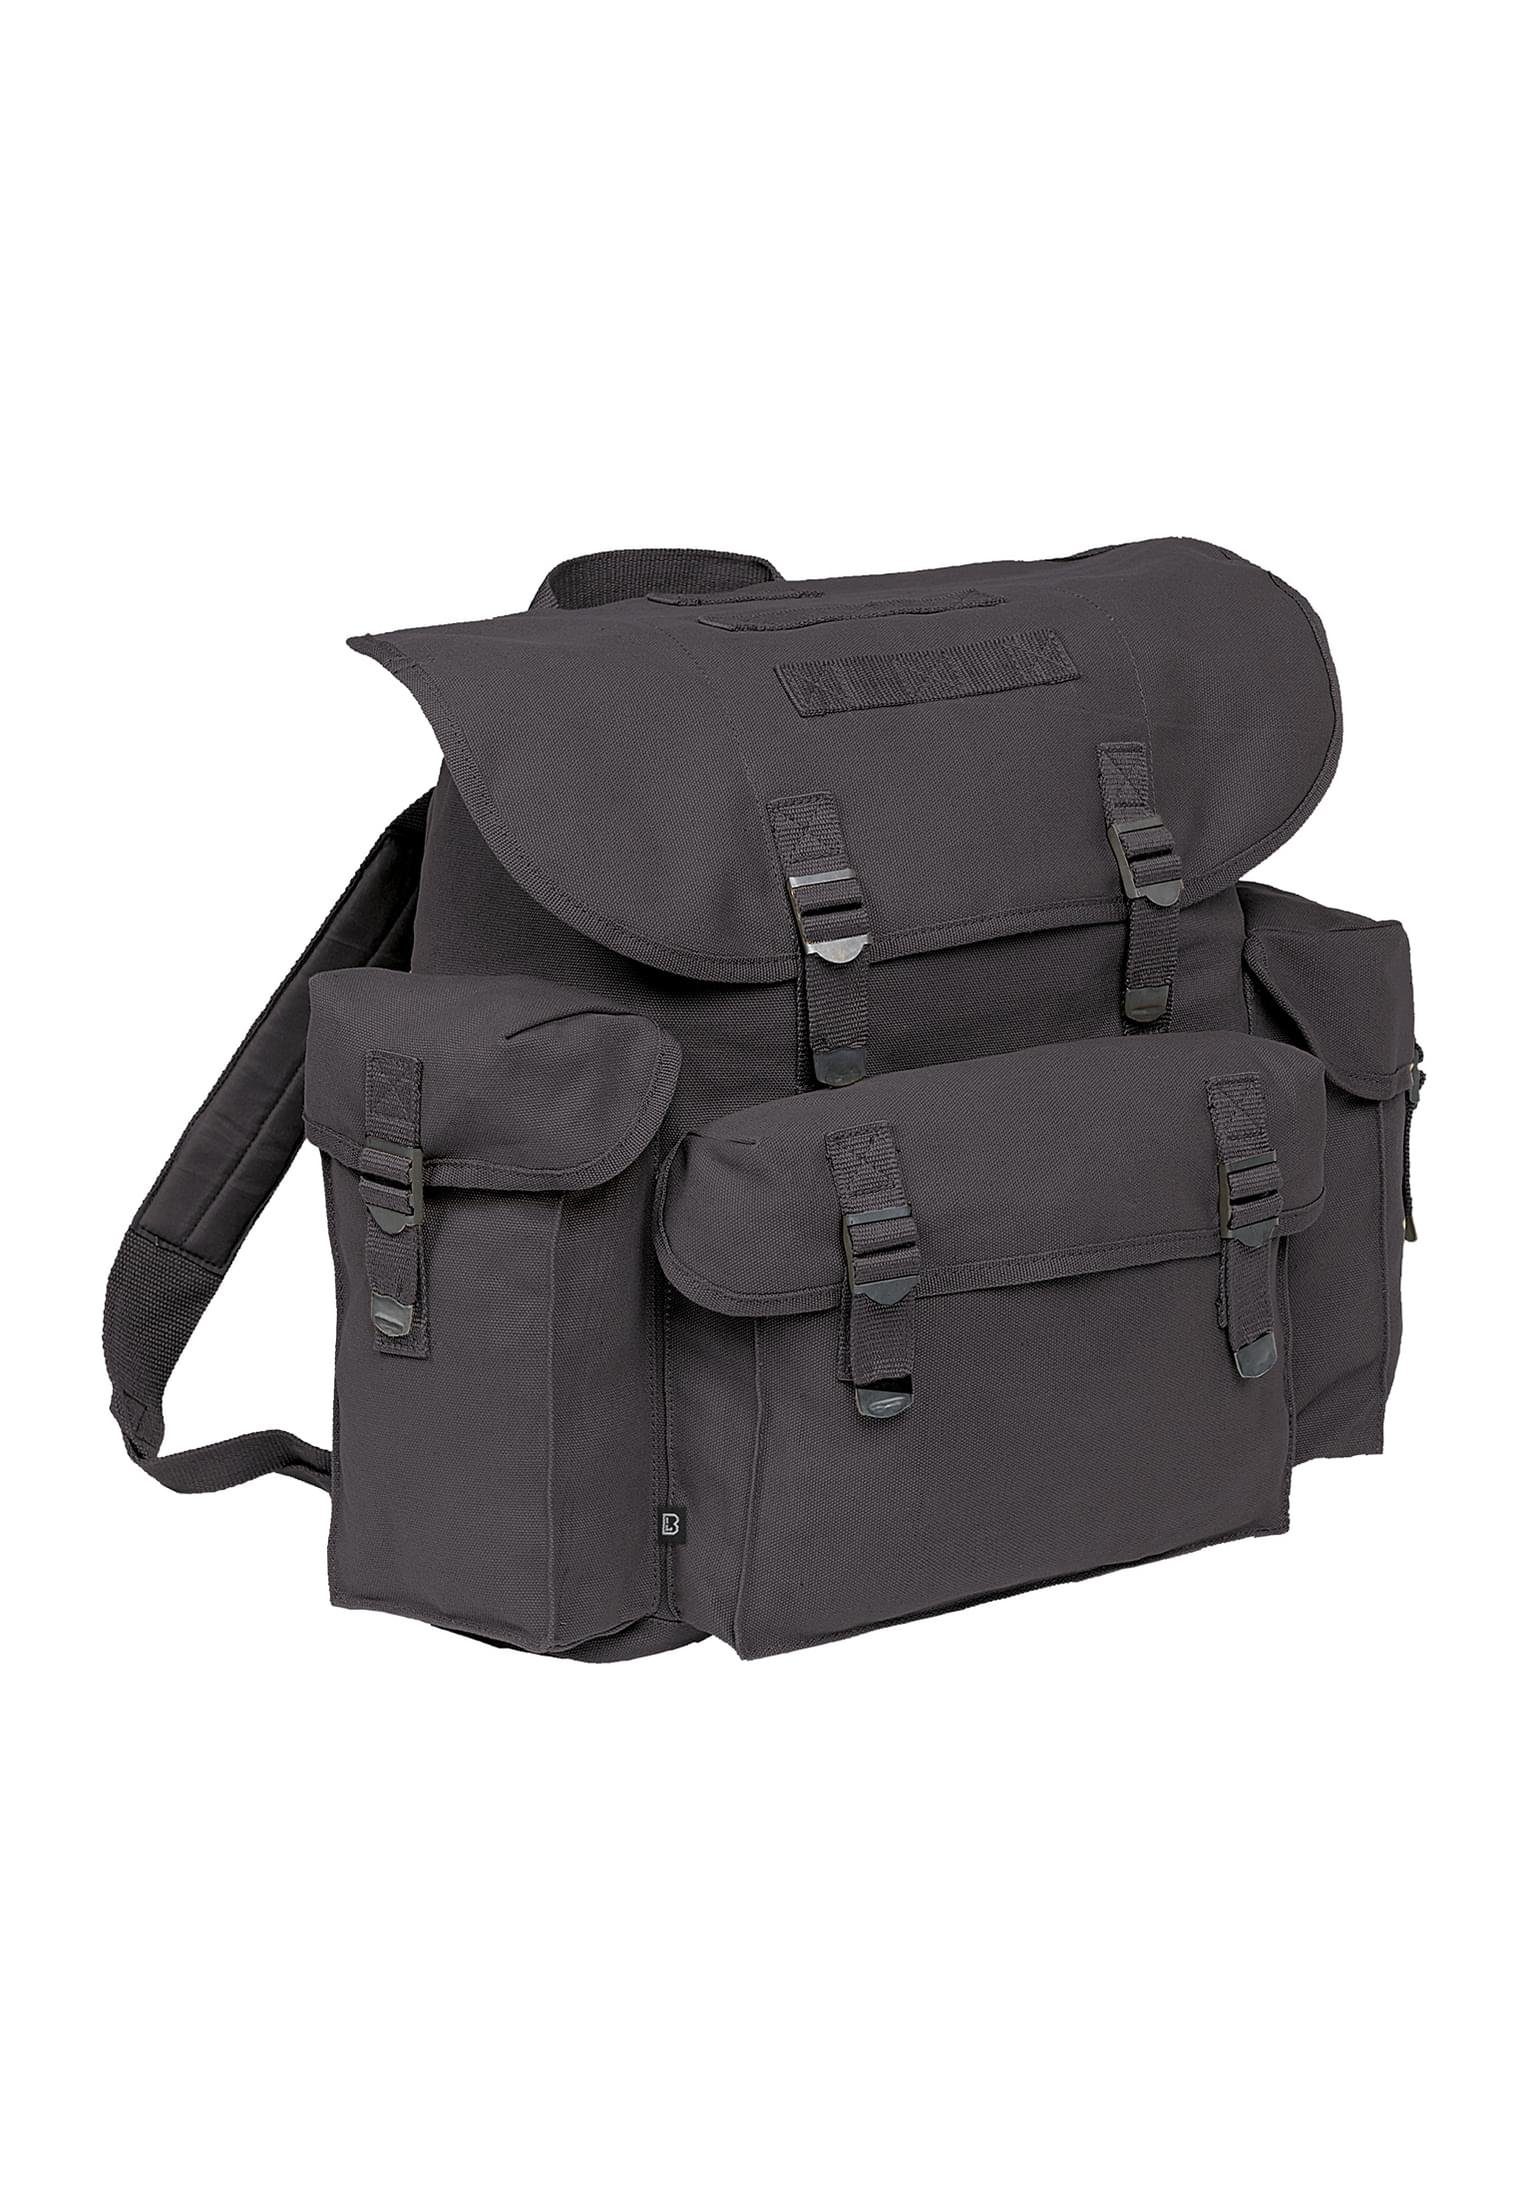 Super Sonderpreis! Brandit Rucksack Military Accessoires Pocket black Bag